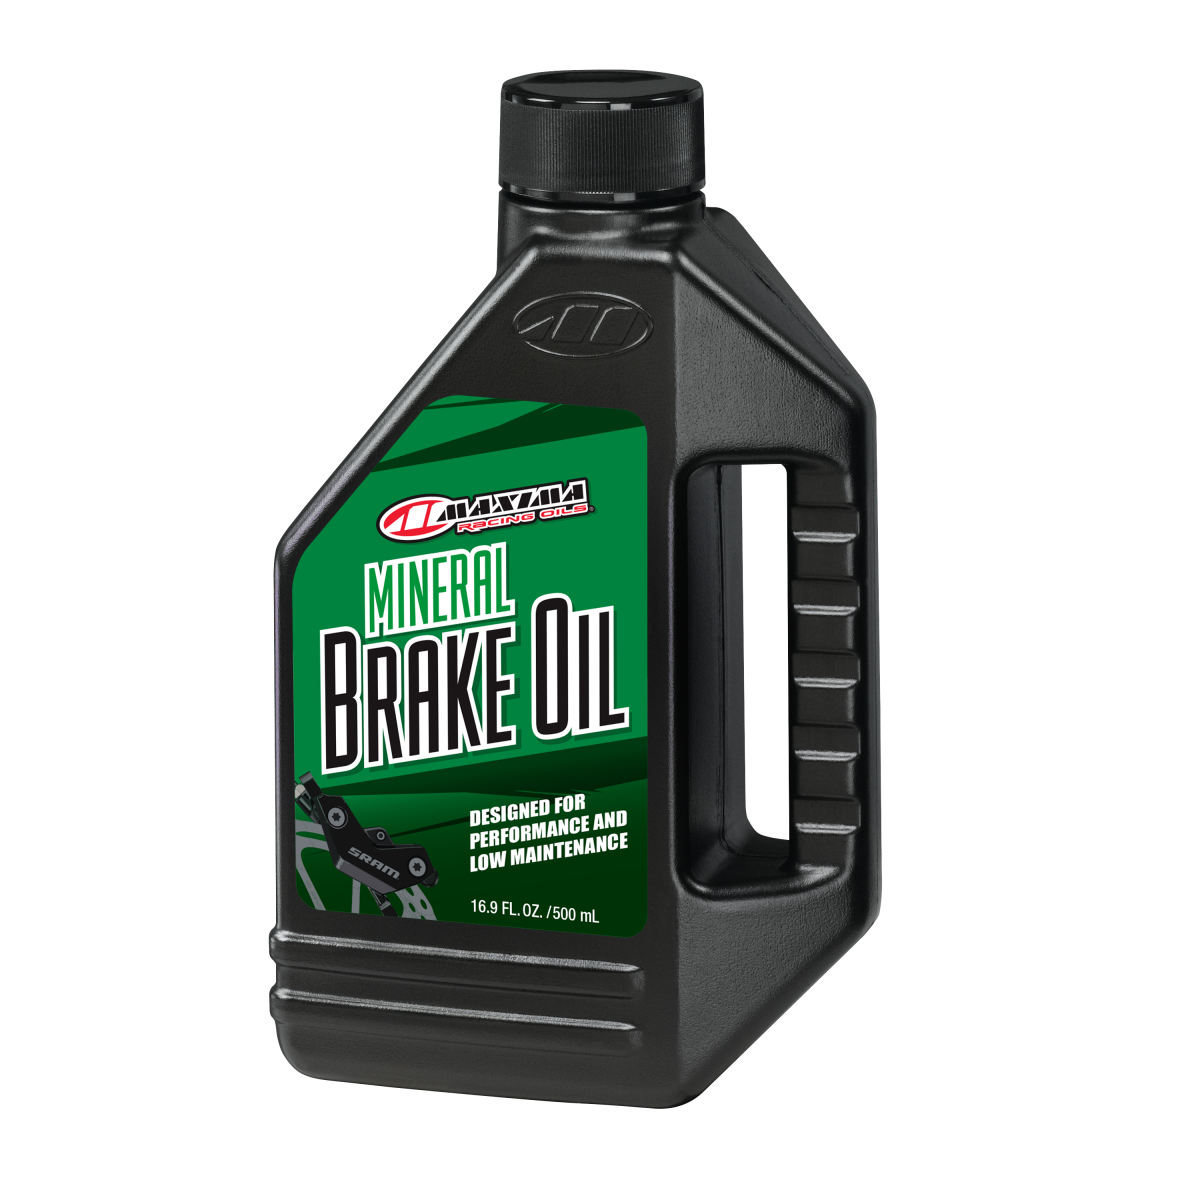 MINERAL BRAKE OIL